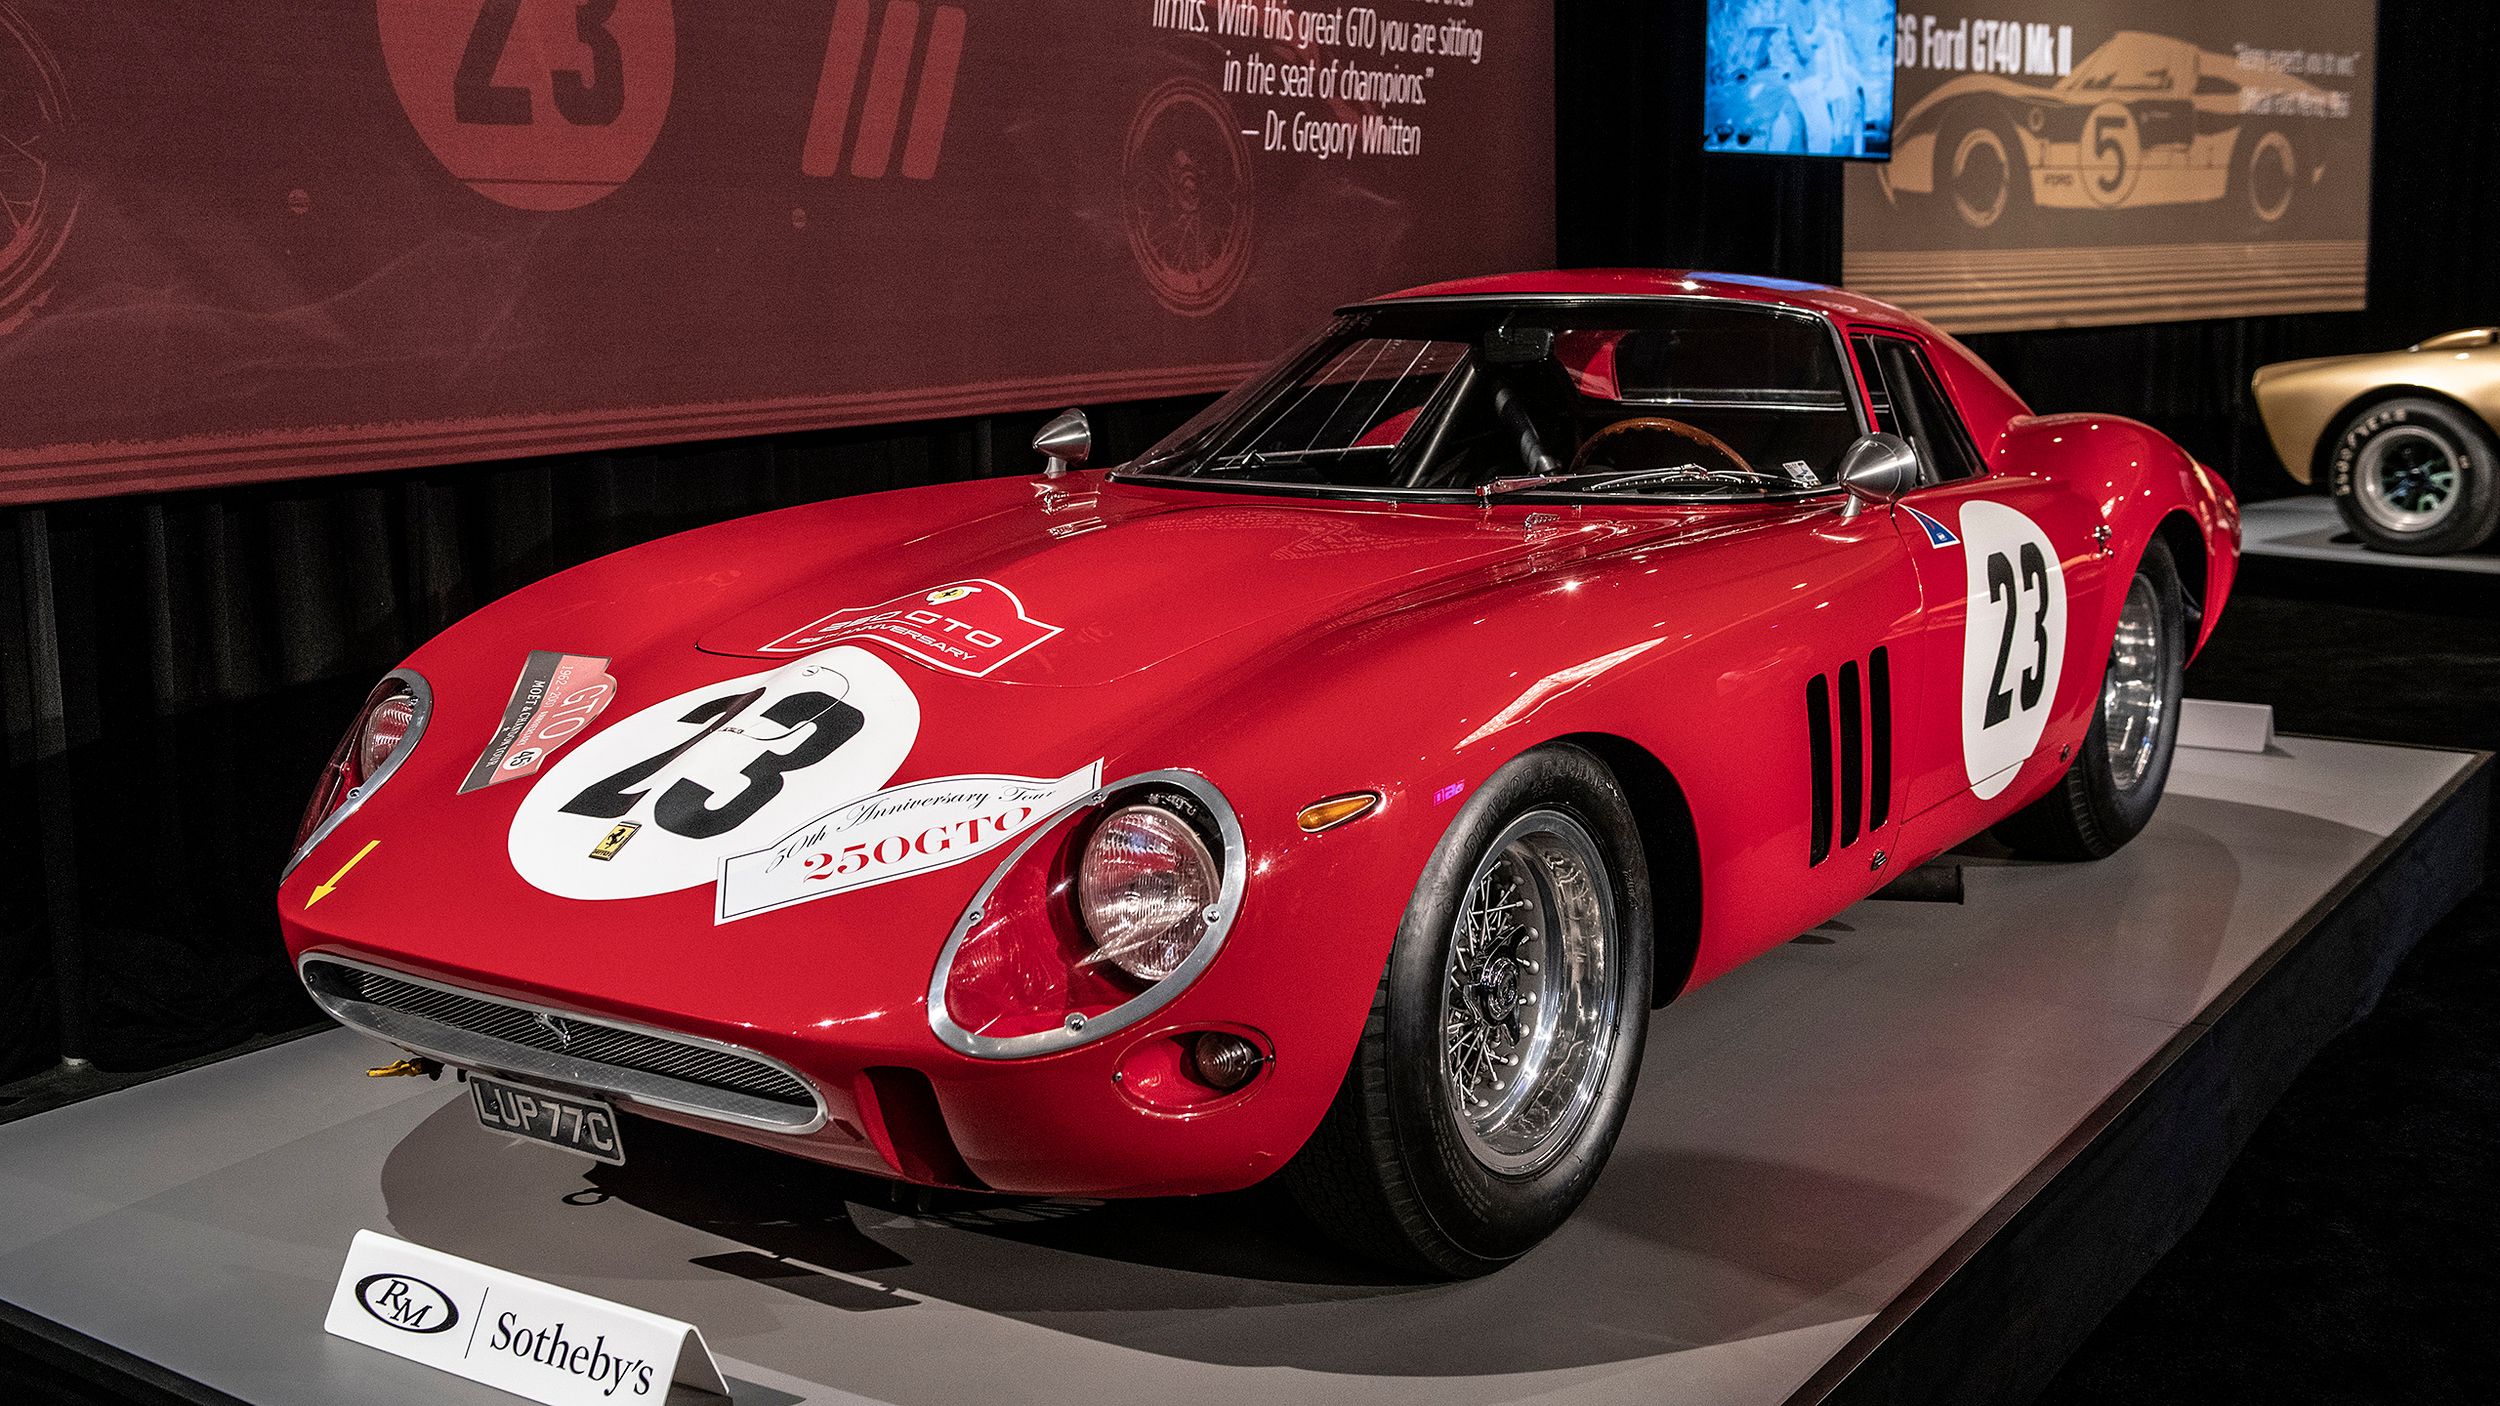 1962 Ferrari 250 GTO at auction in 2018